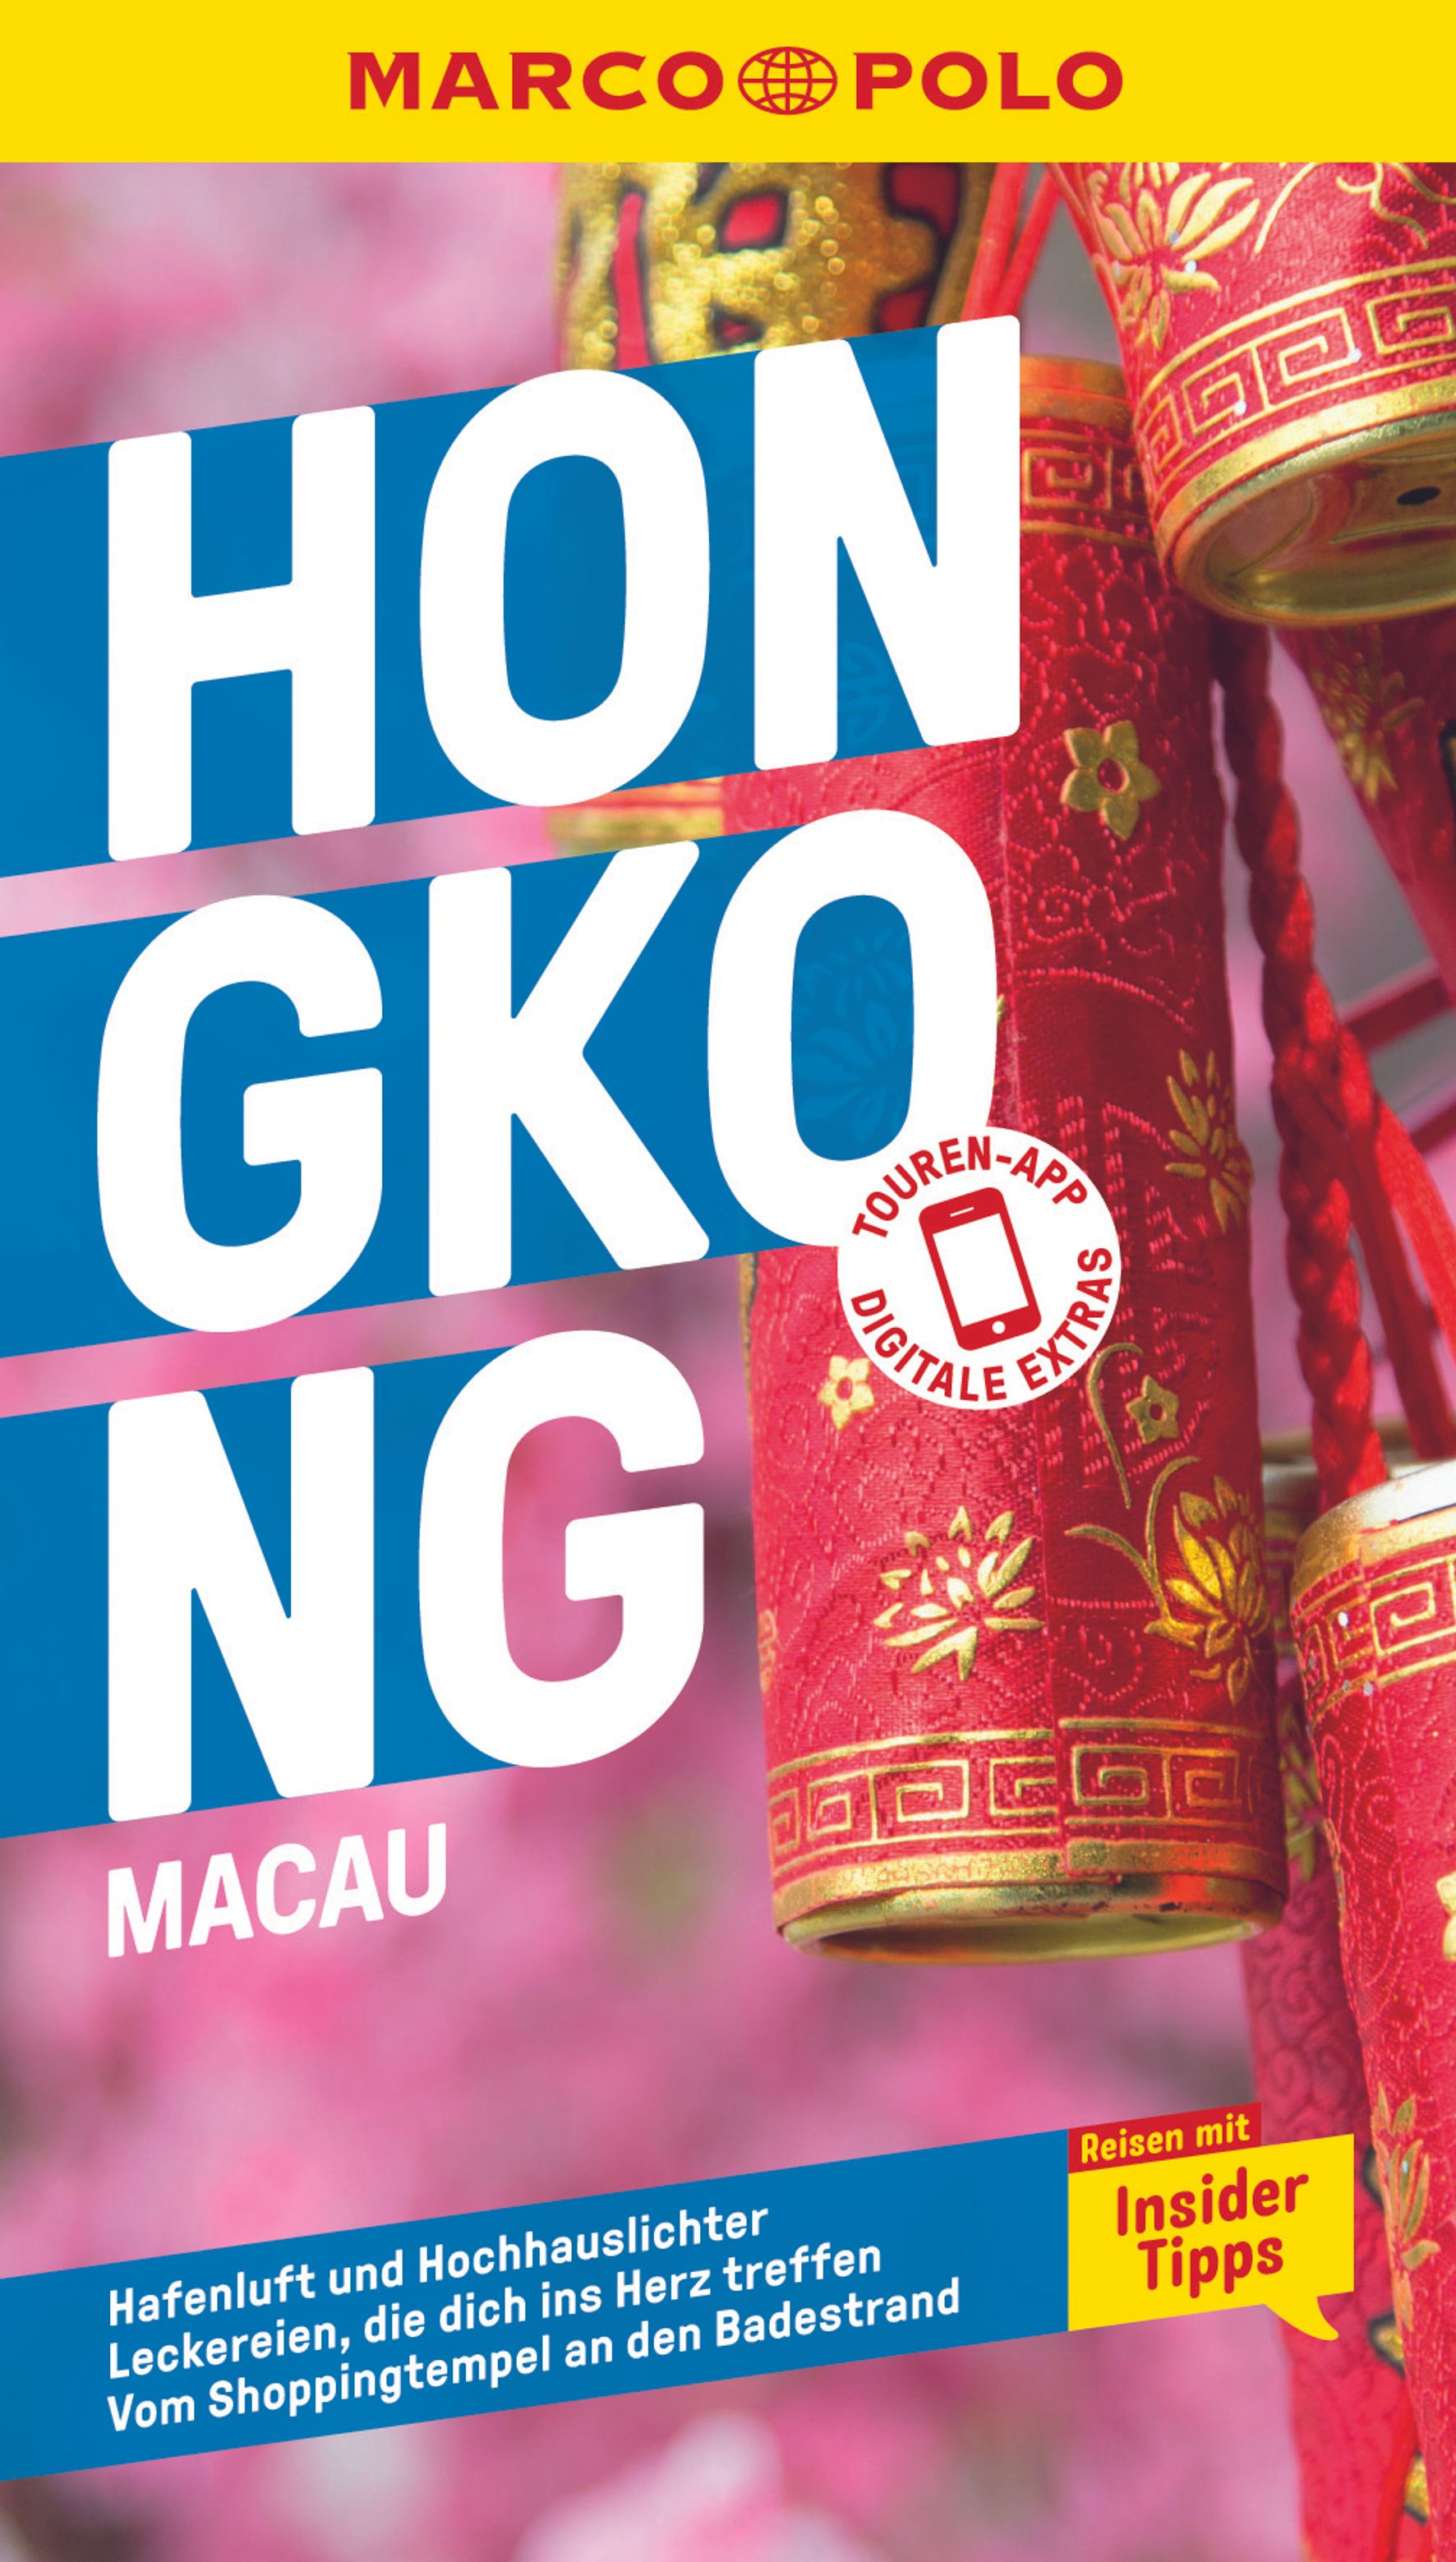 MAIRDUMONT Hongkong, Macau (eBook)